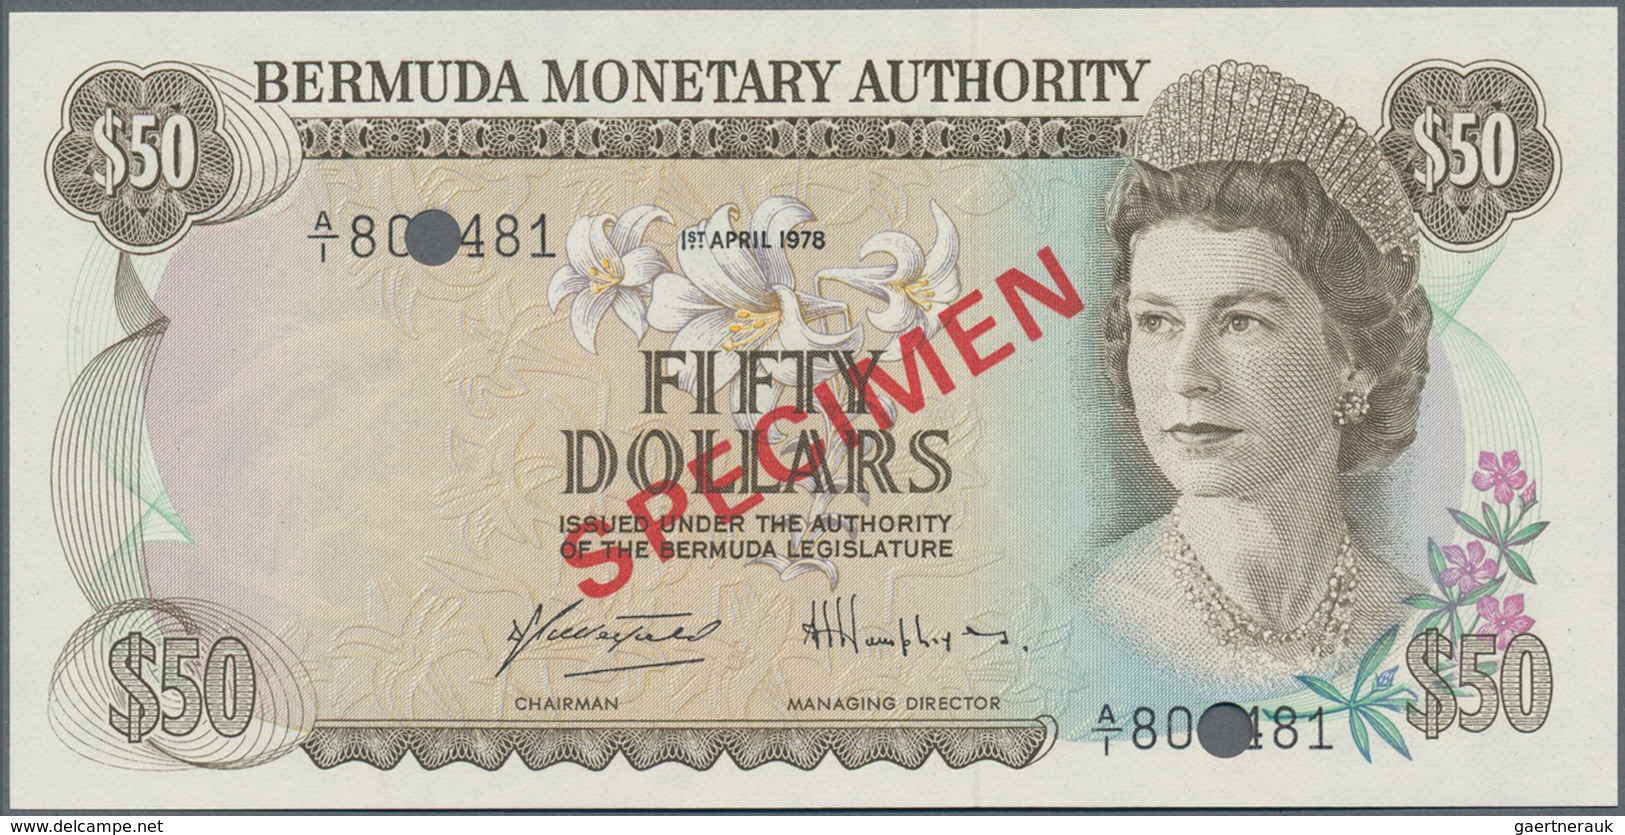 Bermuda: Nice Specimen set of the Bermuda Monetary Authority with 1, 5, 10, 20, 50 and 100 Dollars S